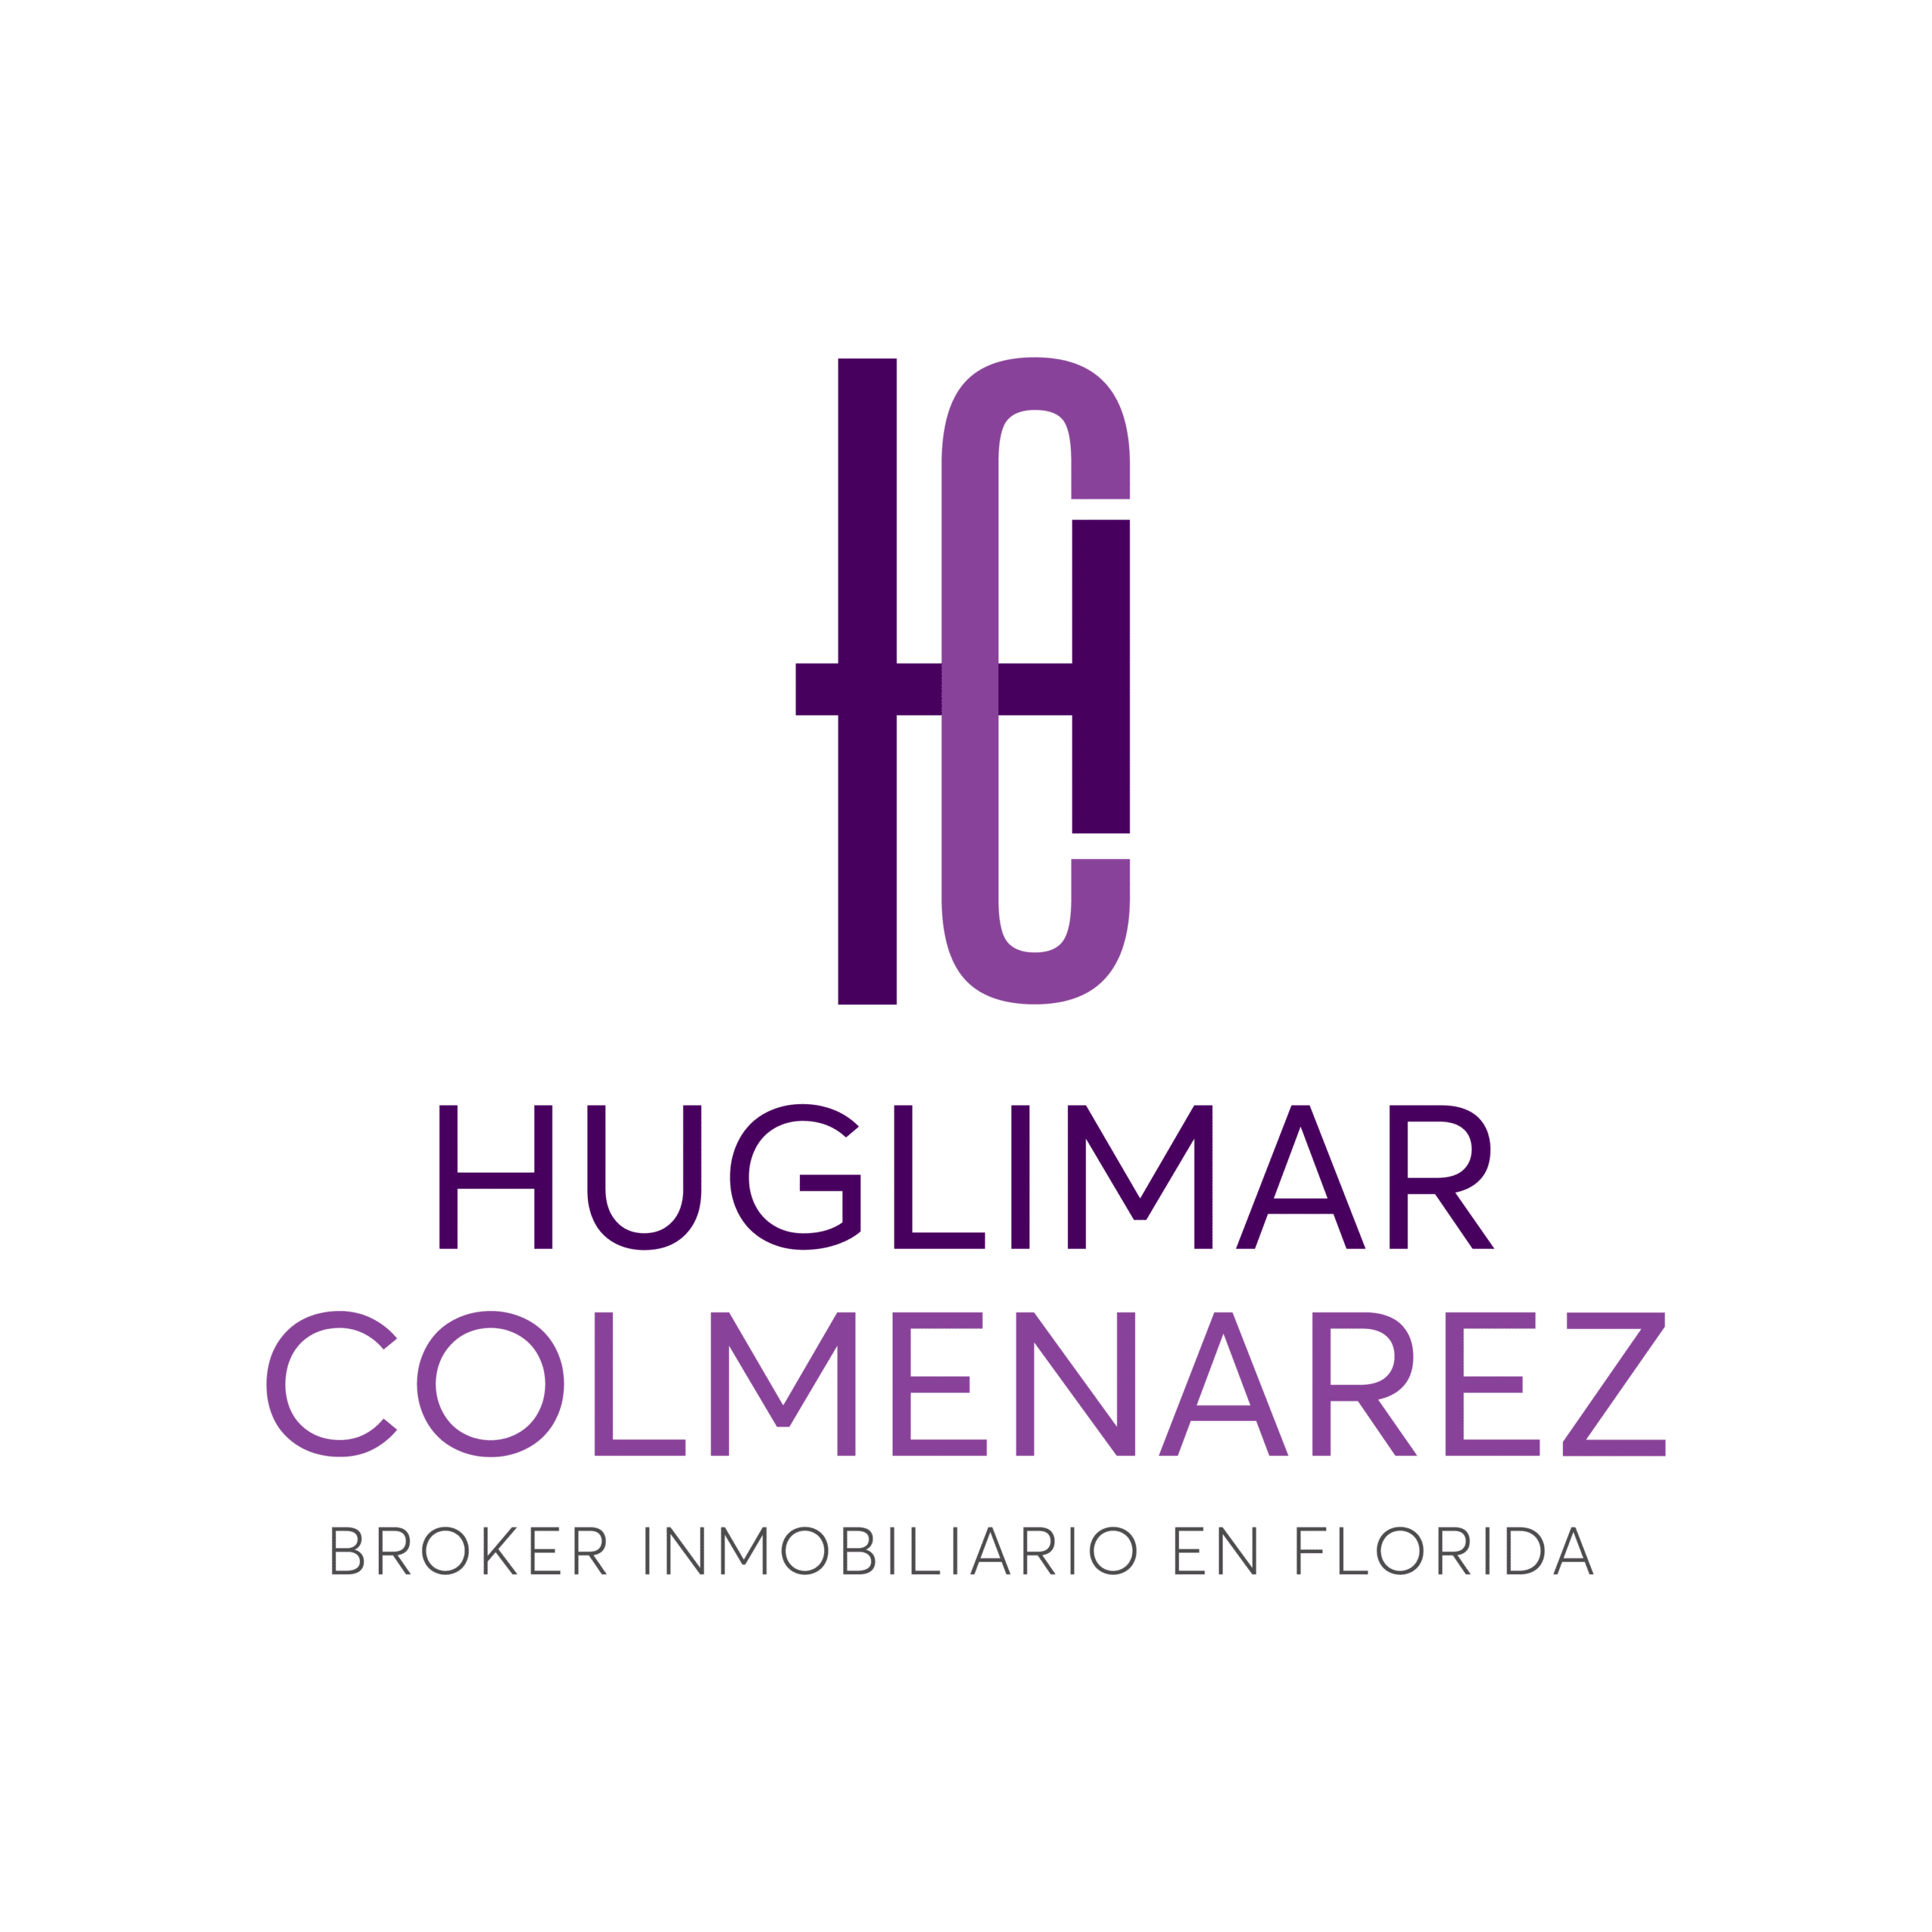 Huglimar Colmenarez